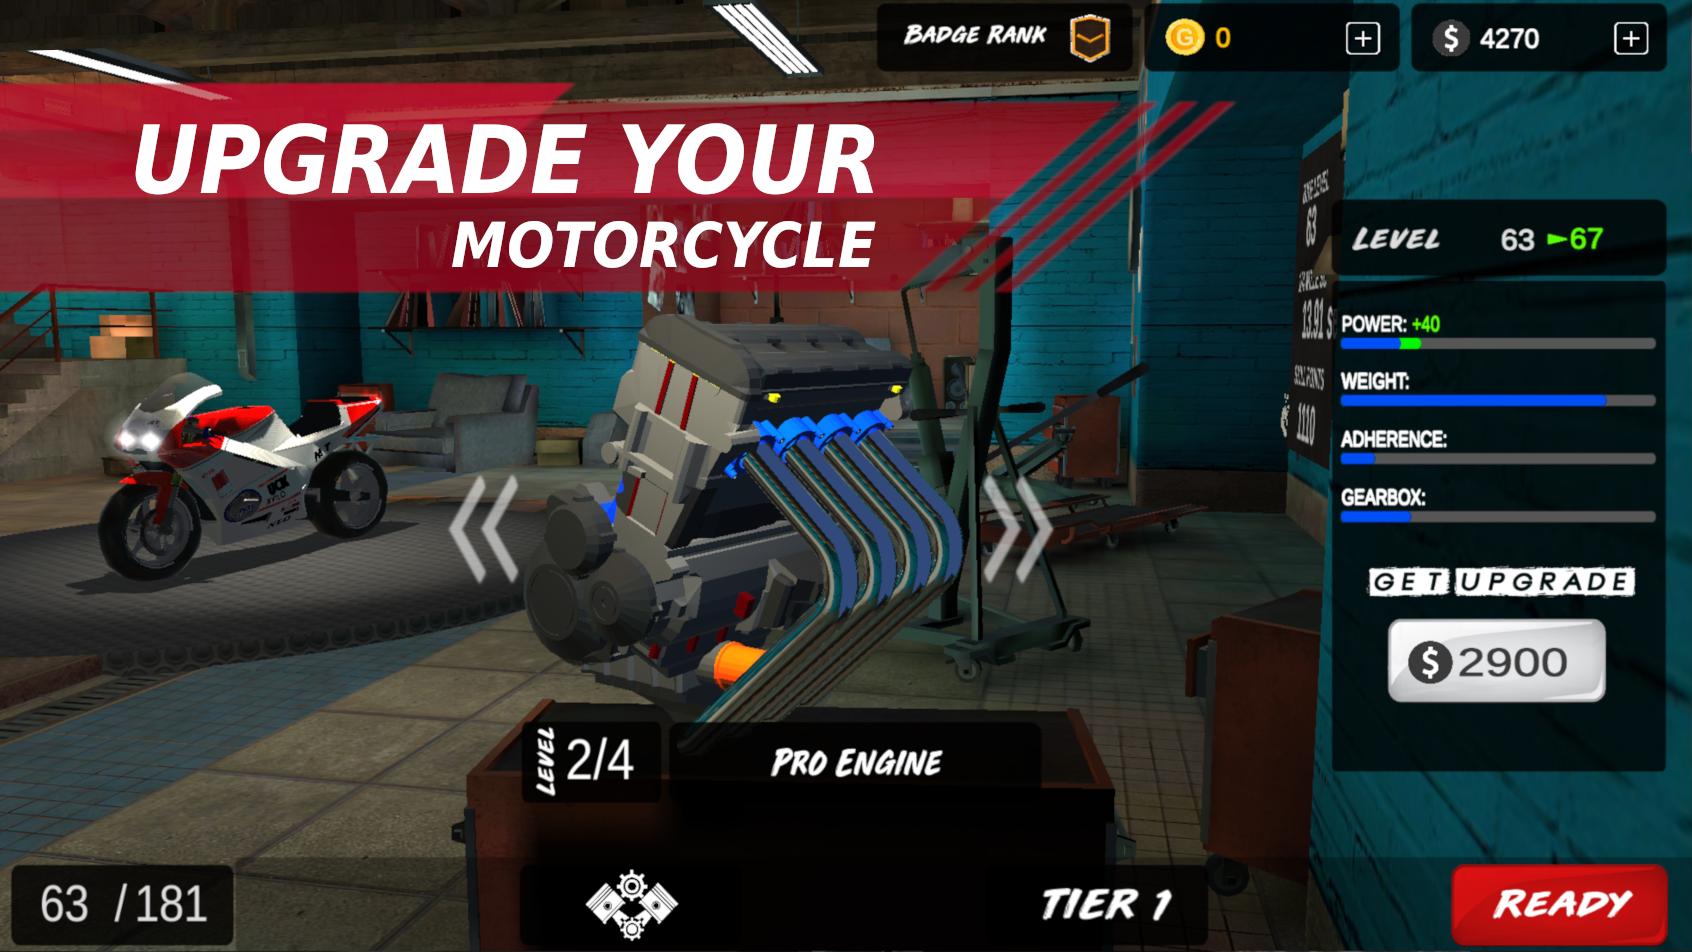 Rebel Gears Drag Bike Racing / CSR Race Moto Game 1.3.2 Screenshot 22